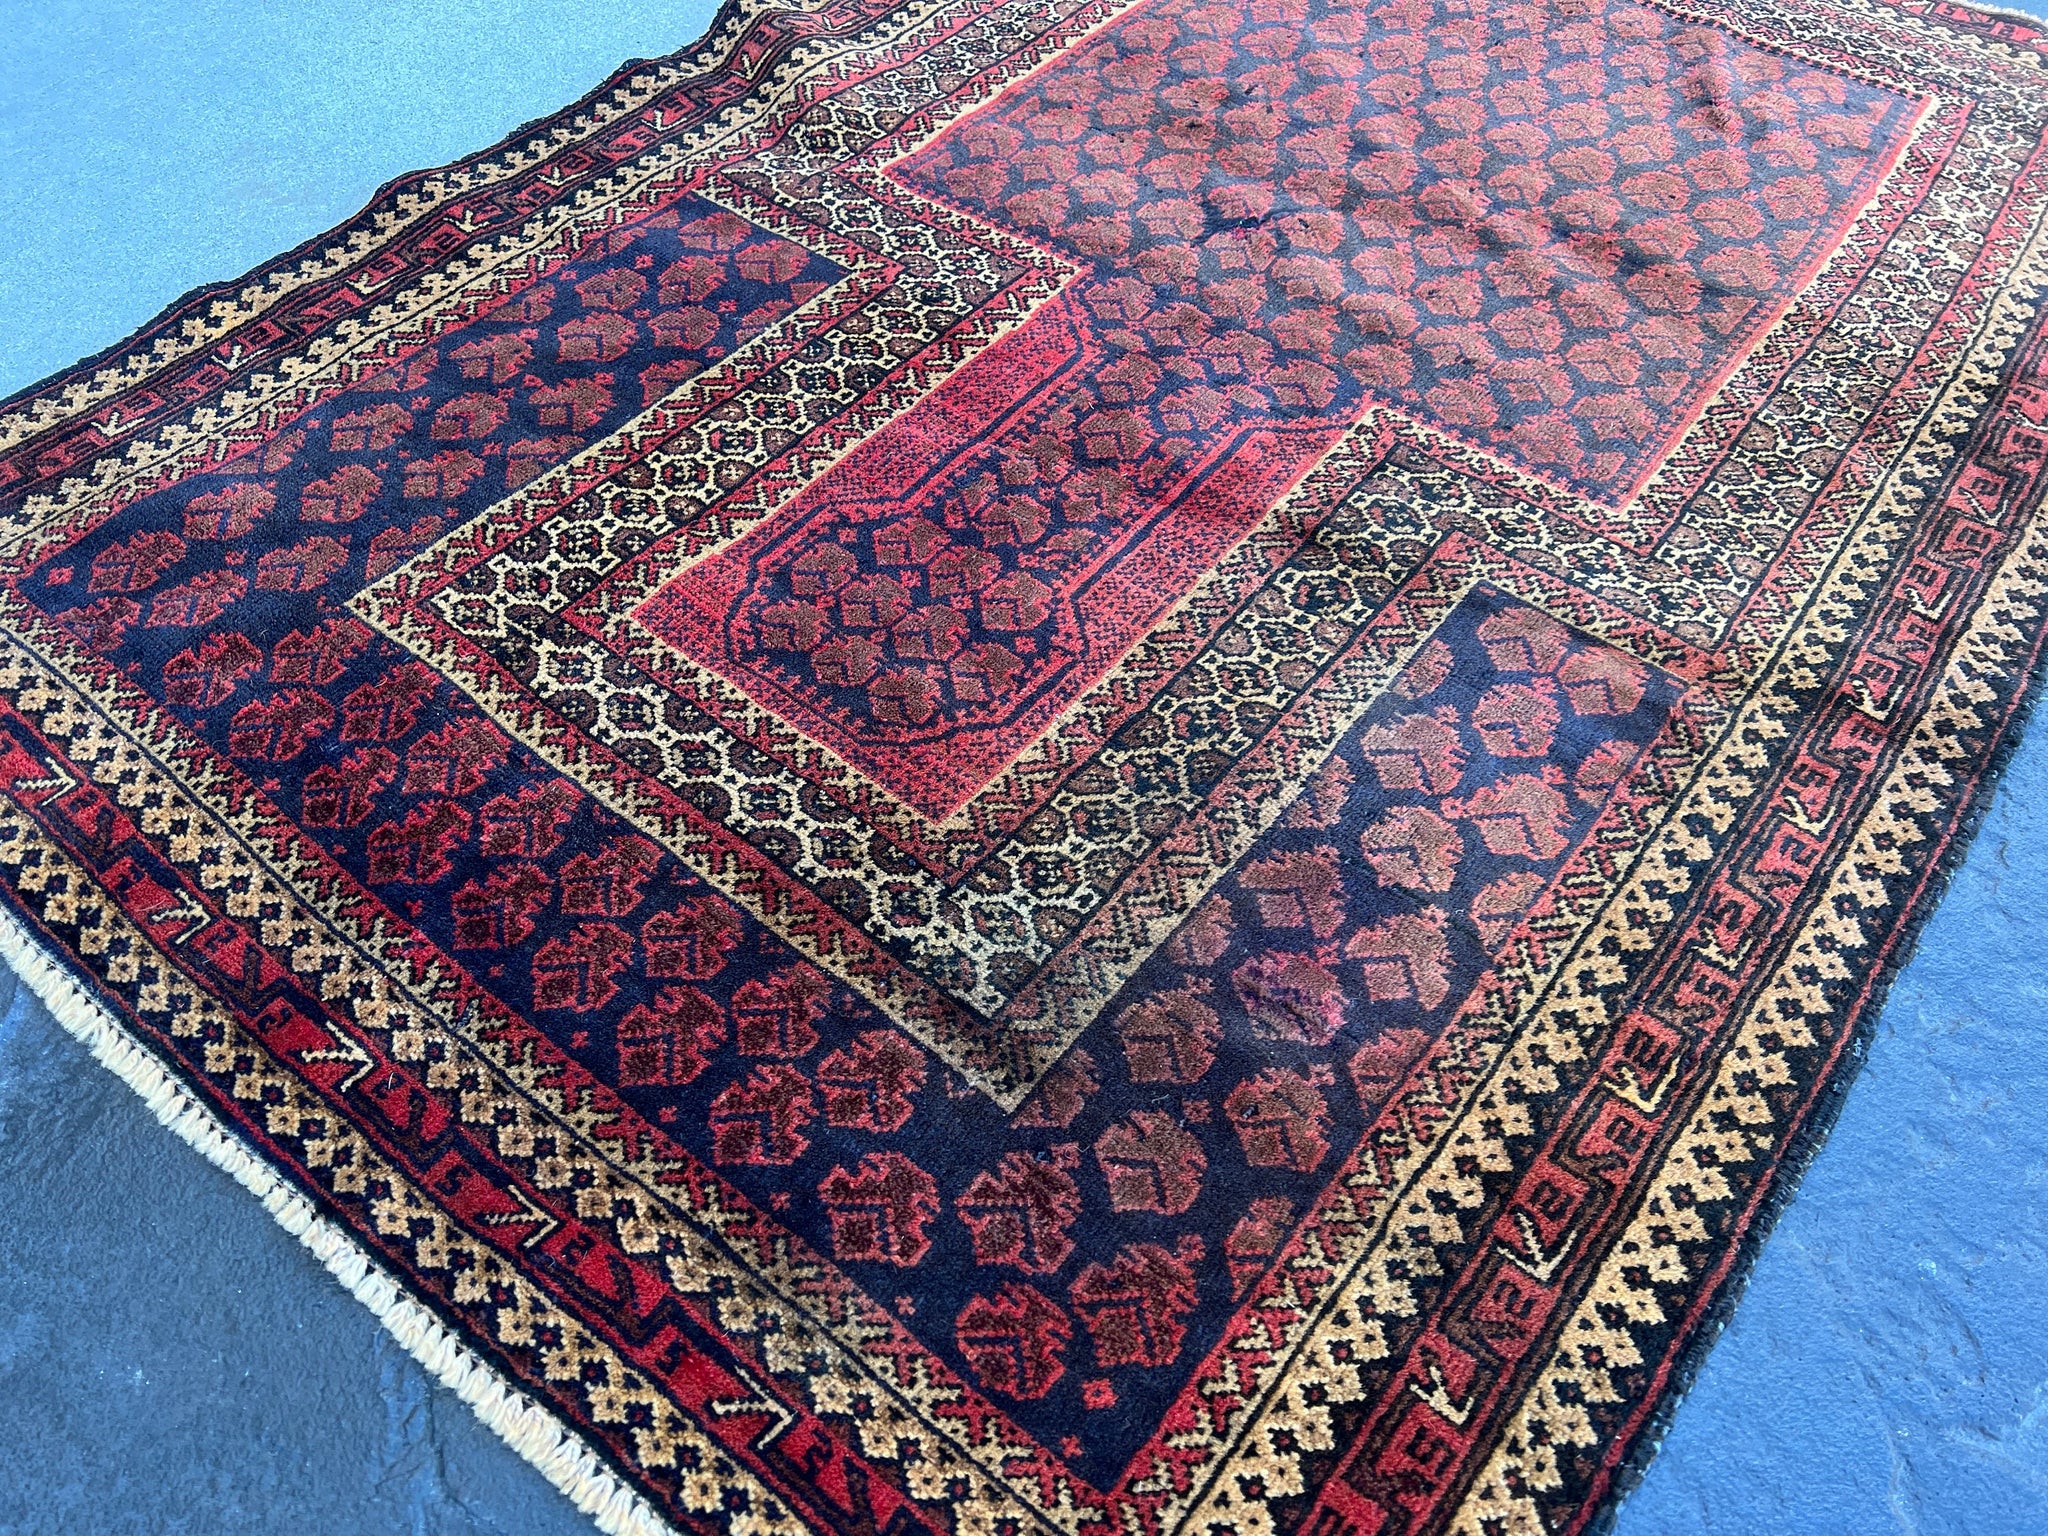 3x5 (100x180) Vintage Handmade Afghan Baluchi Rug | Crimson Red Chocolate Brown Taupe Black Cream Beige | Hand Knotted Turkish Persian